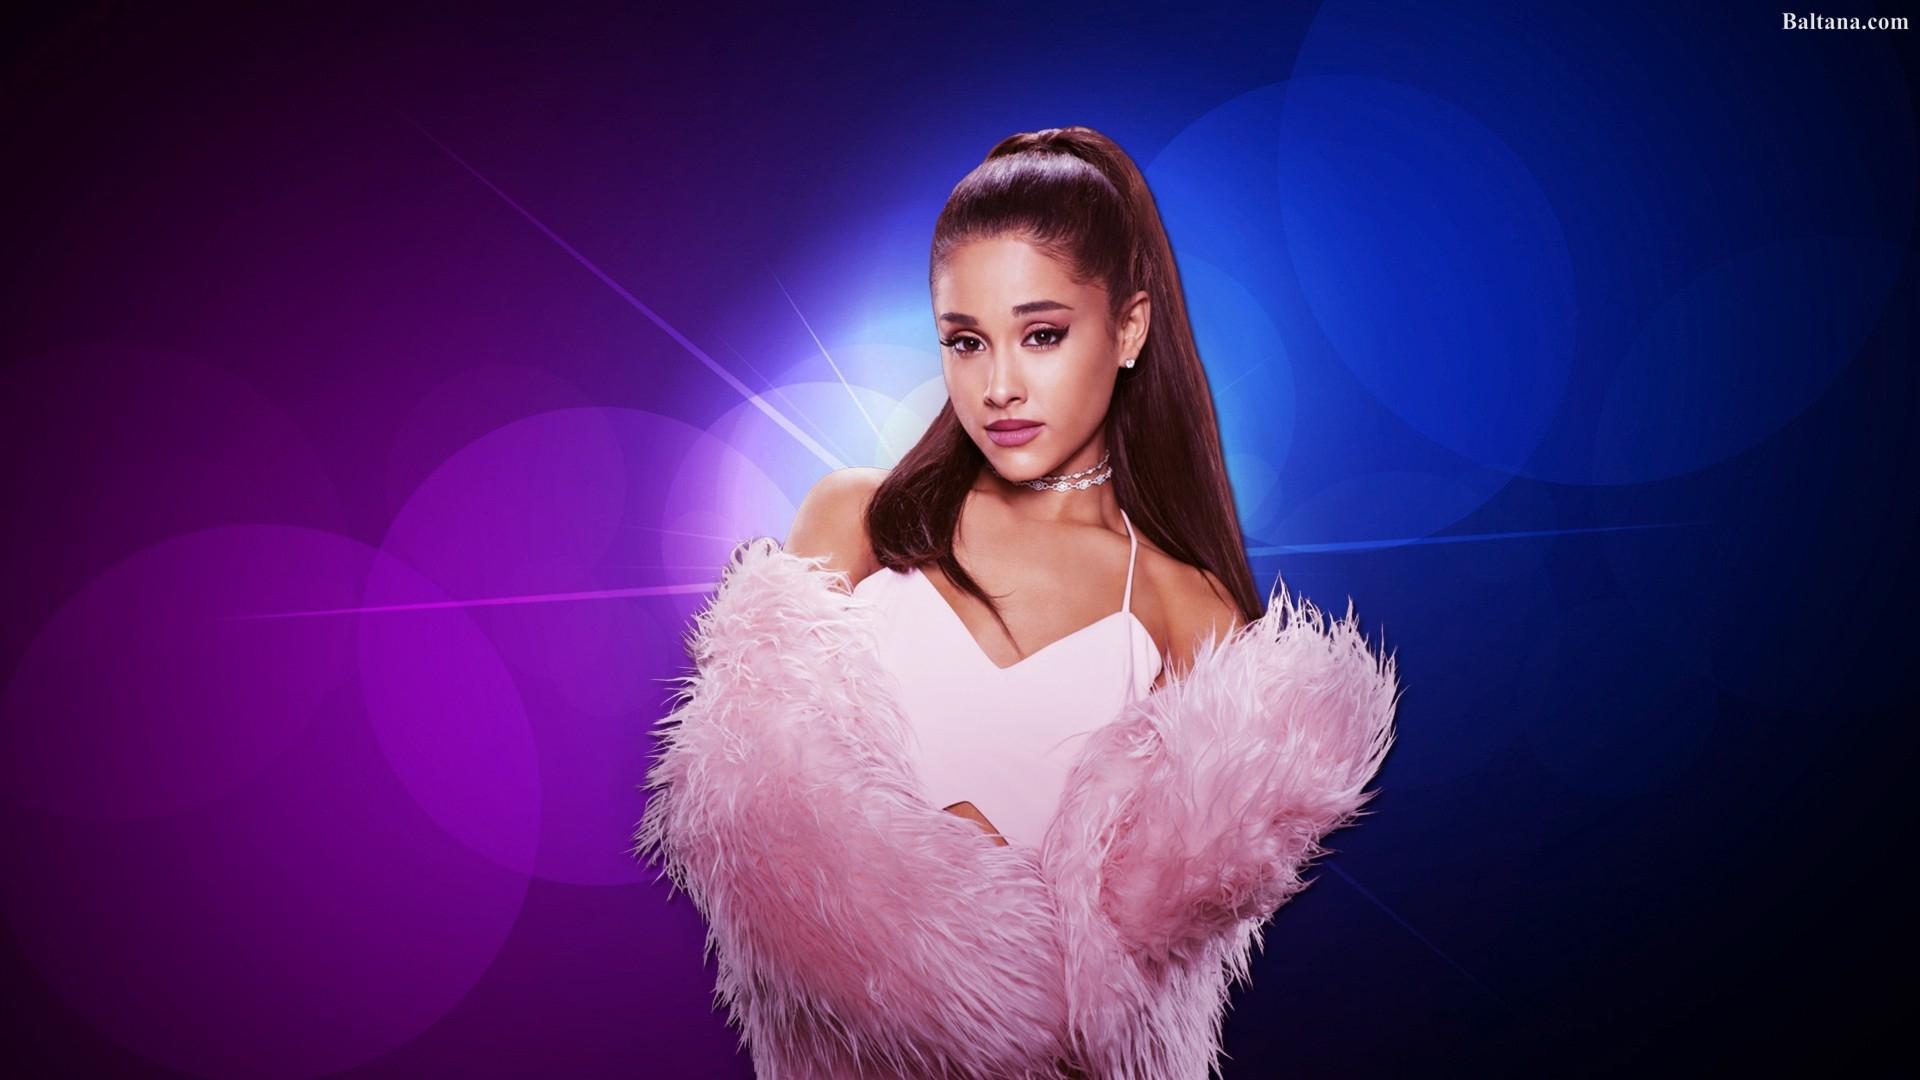 Free download Ariana Grande Wallpaper HD Background Image Pics